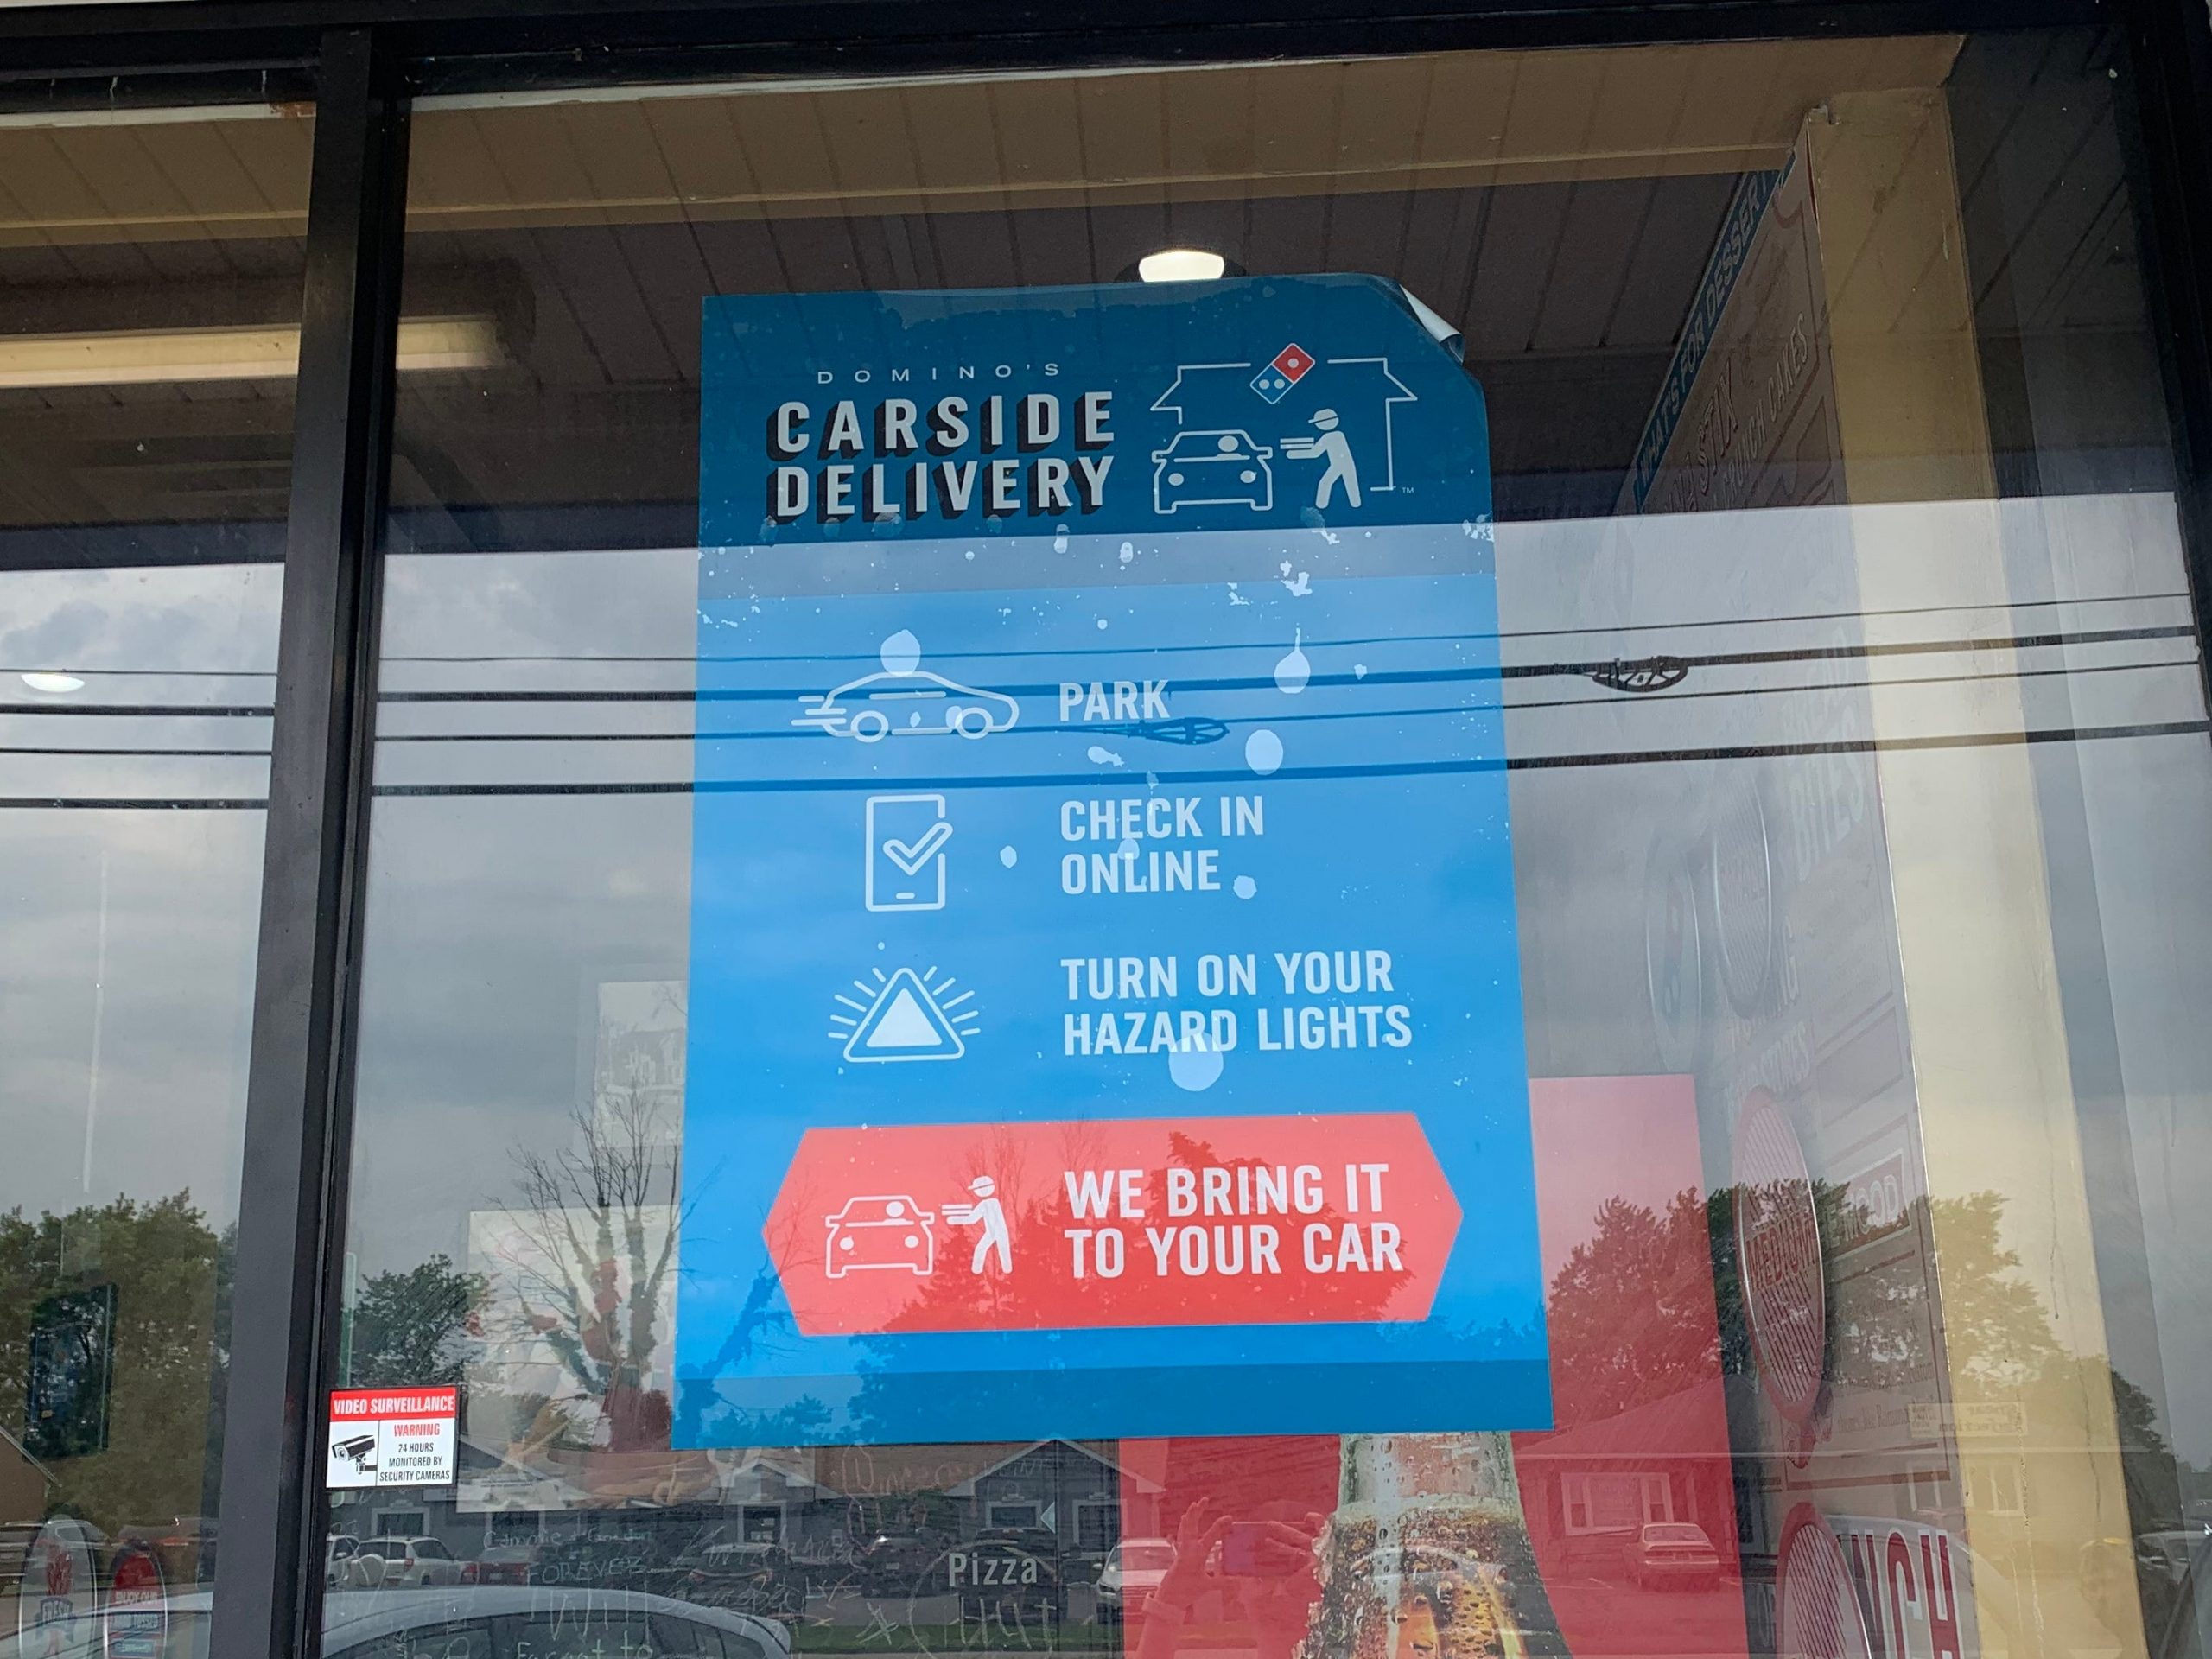 Dominos' carside delivery